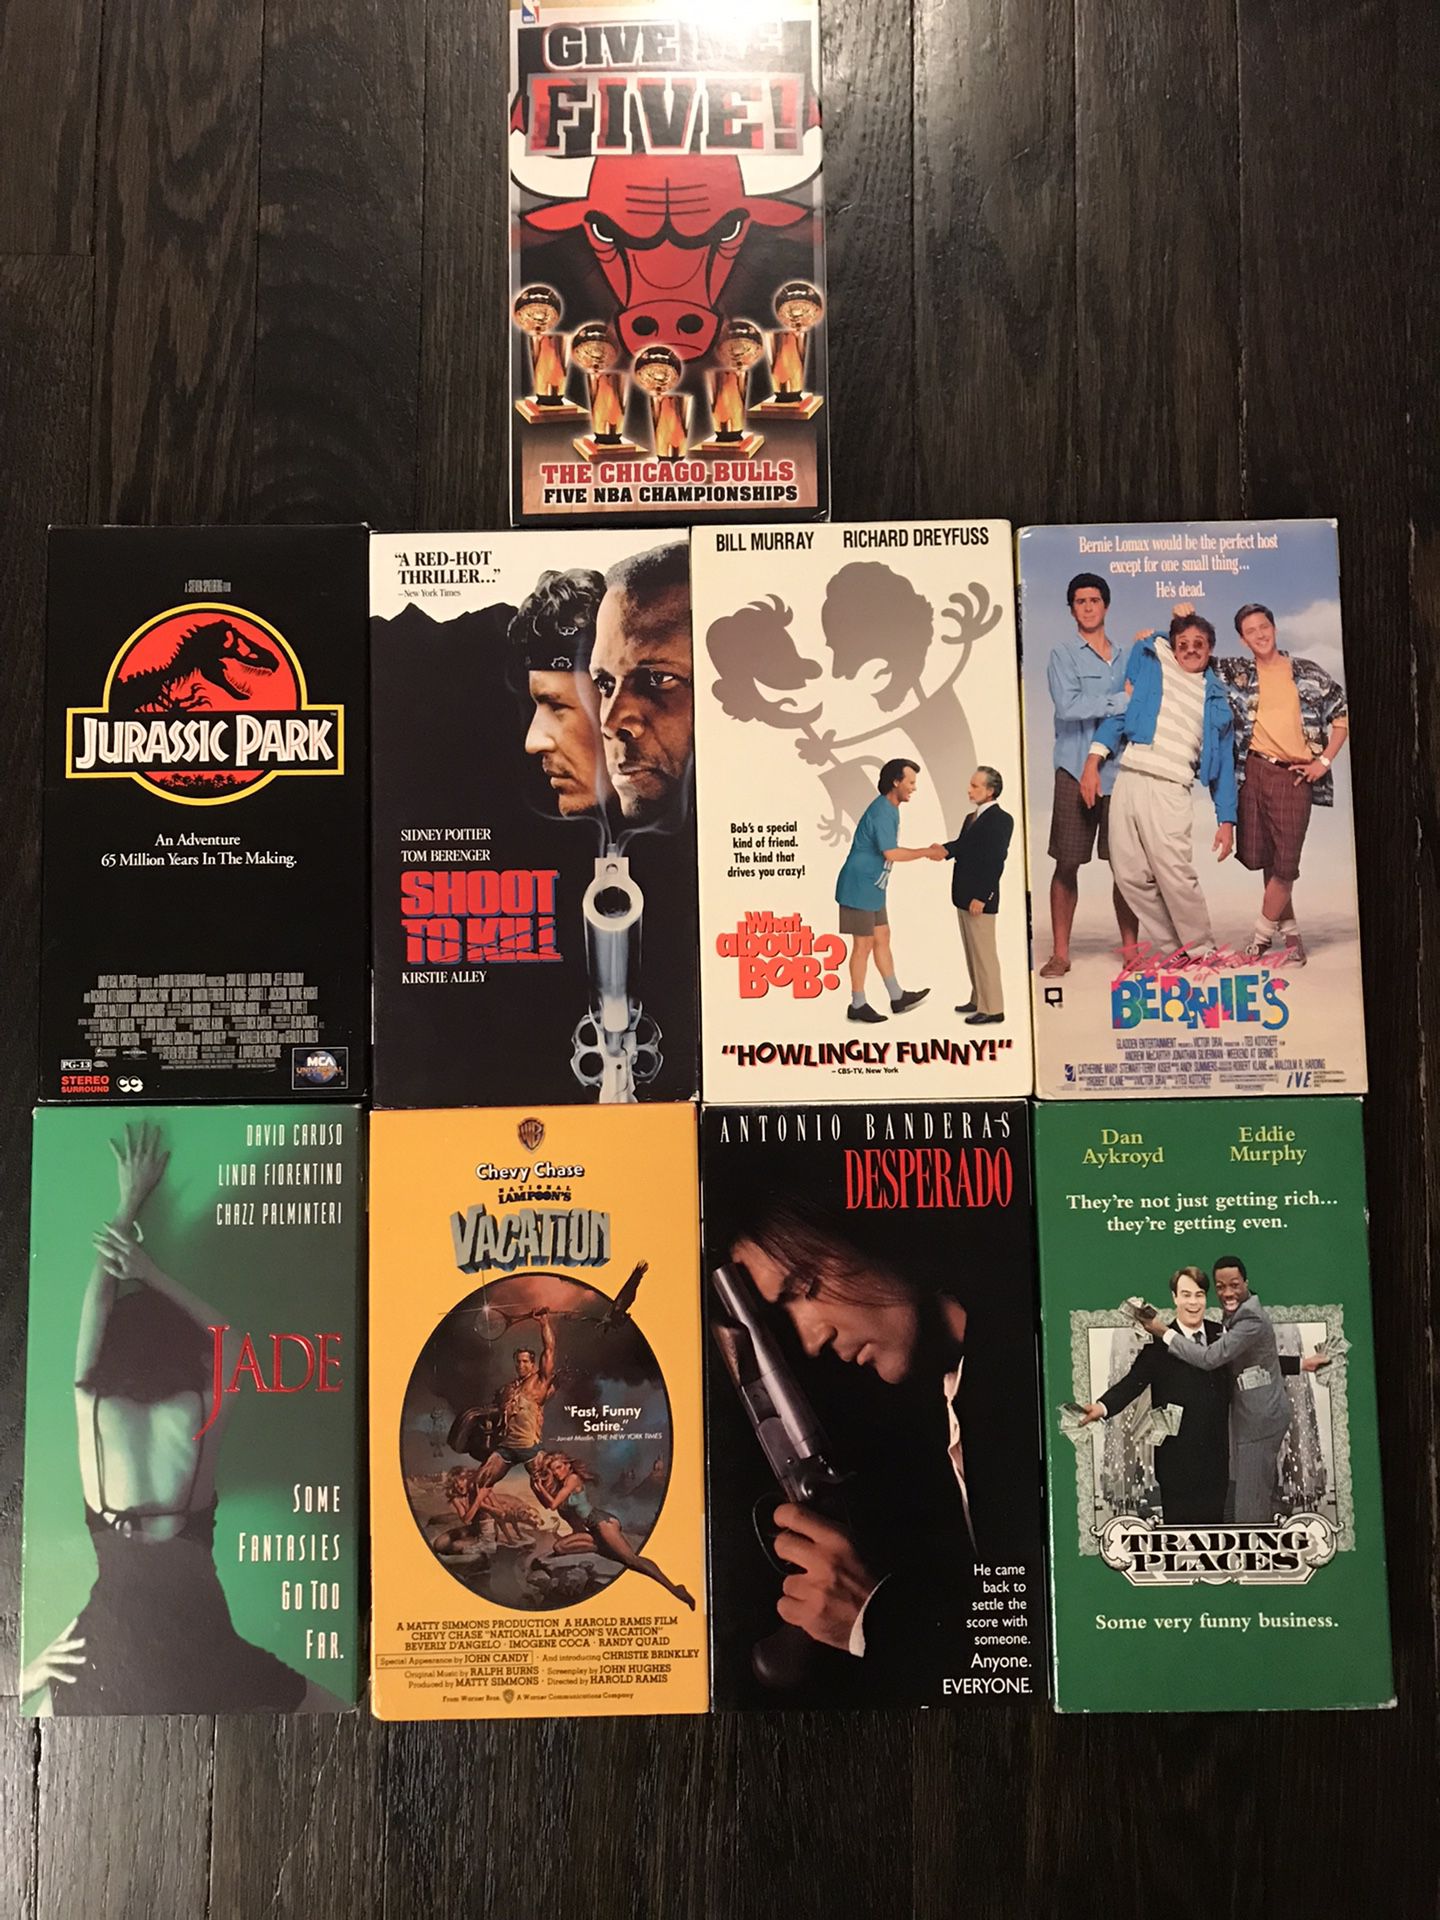 9 VHS Movies